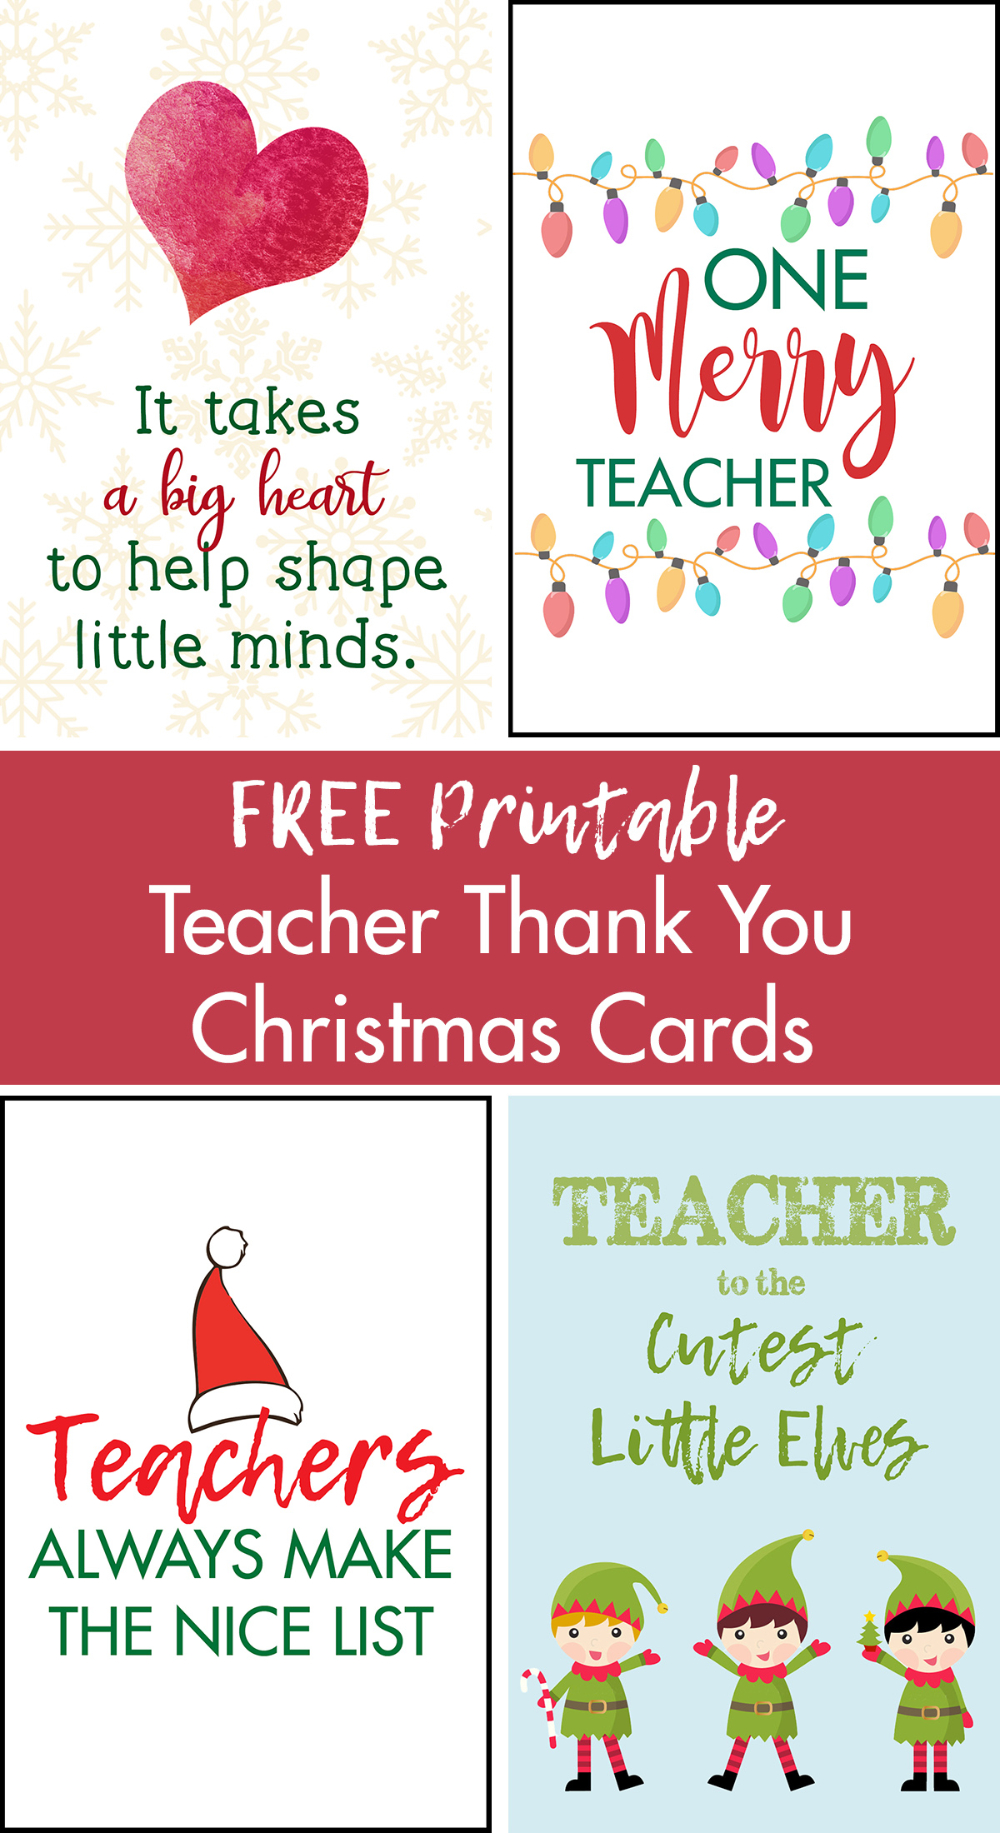 Express Gratitude To Teachers With Printable Christmas Cards - Free Printable Christmas Cards For Teachers